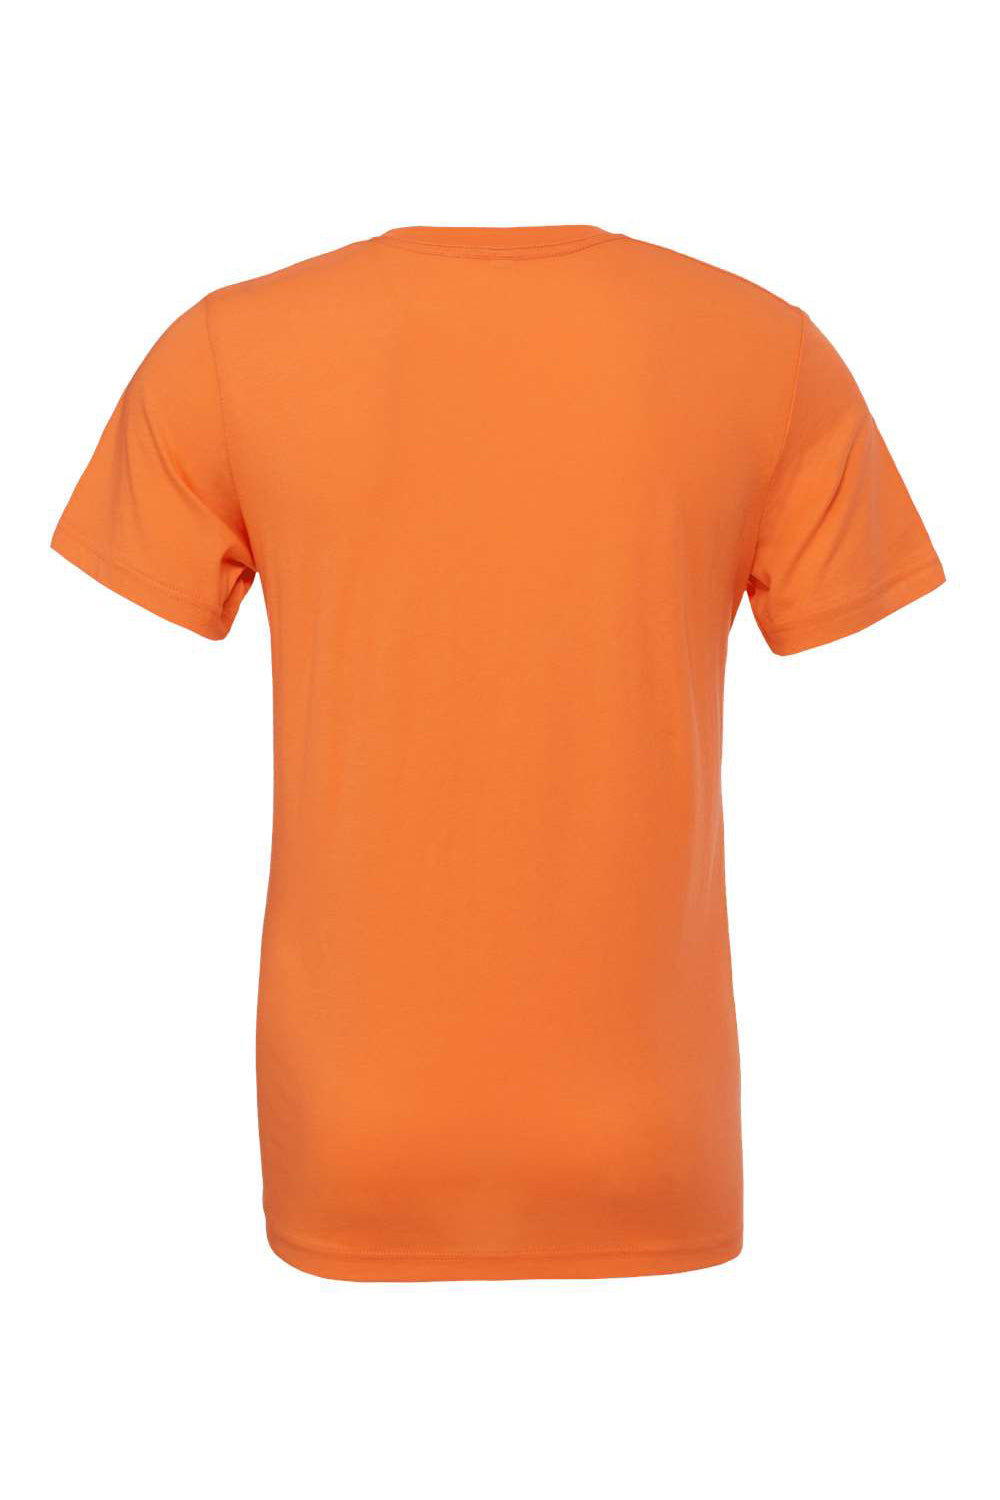 Bella + Canvas BC3001/3001C Mens Jersey Short Sleeve Crewneck T-Shirt Burnt Orange Flat Back